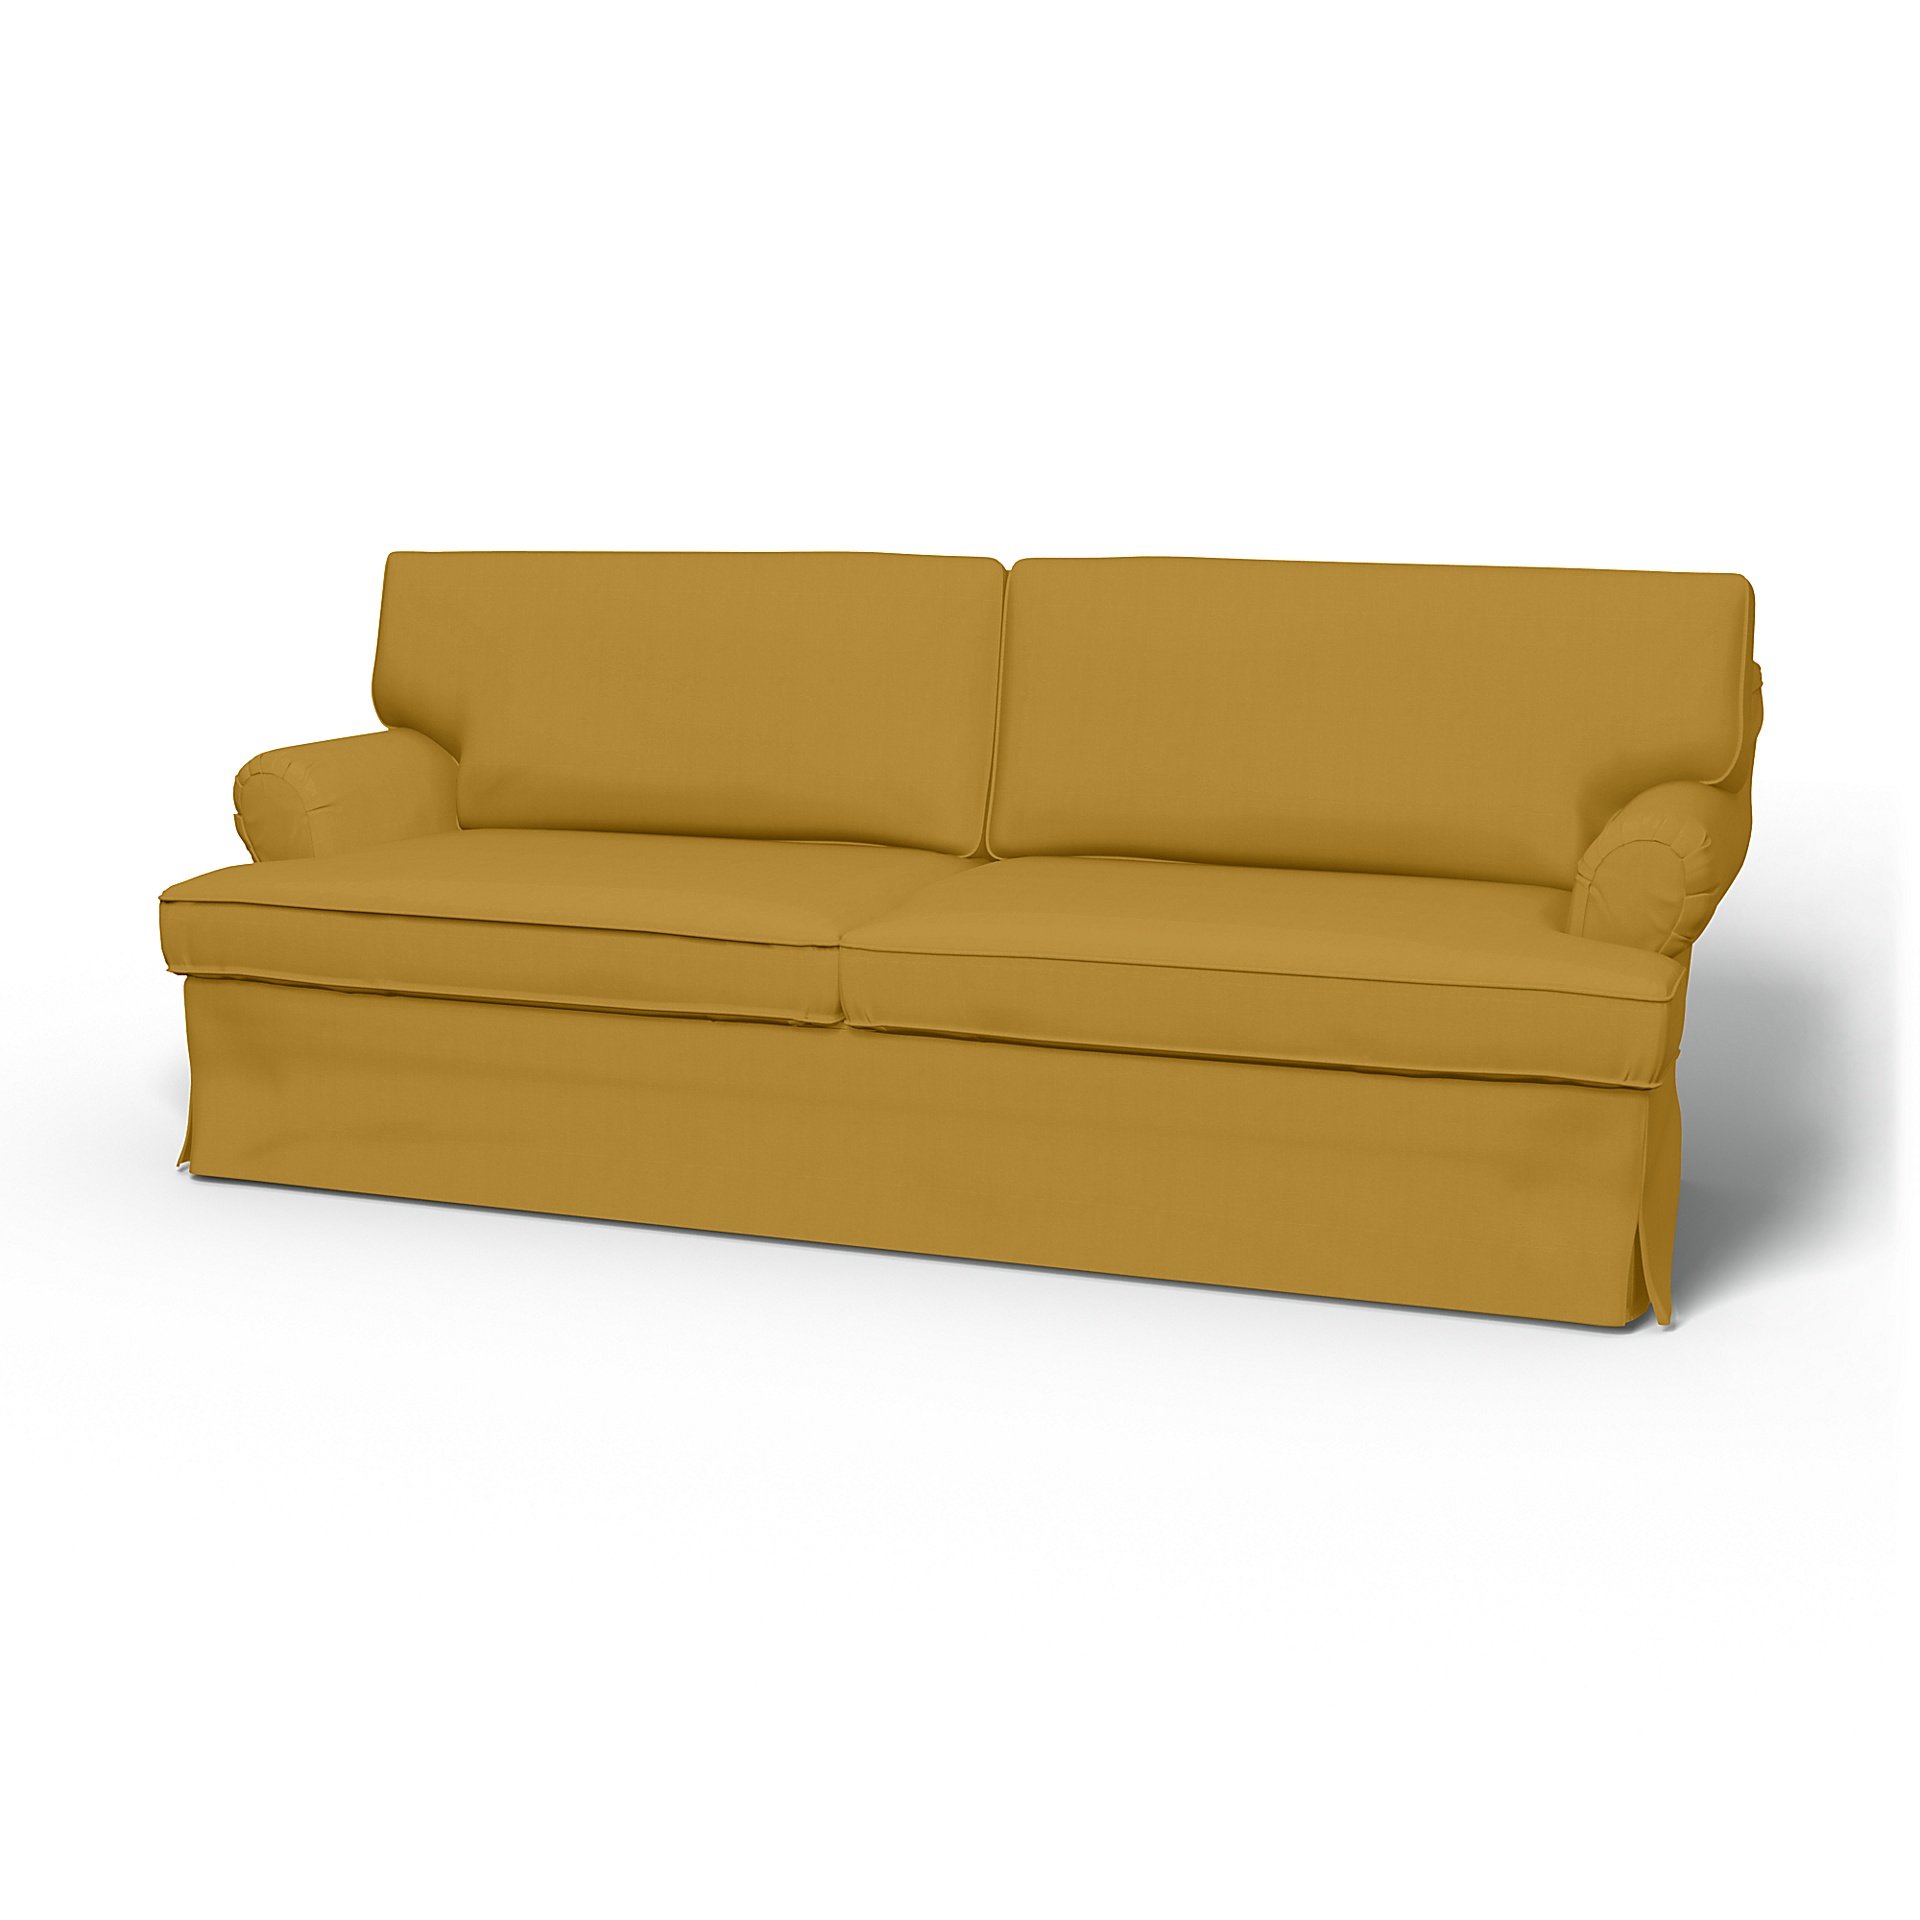 IKEA - Stockholm 3 Seater Sofa Cover (1994-2000), Honey Mustard, Cotton - Bemz